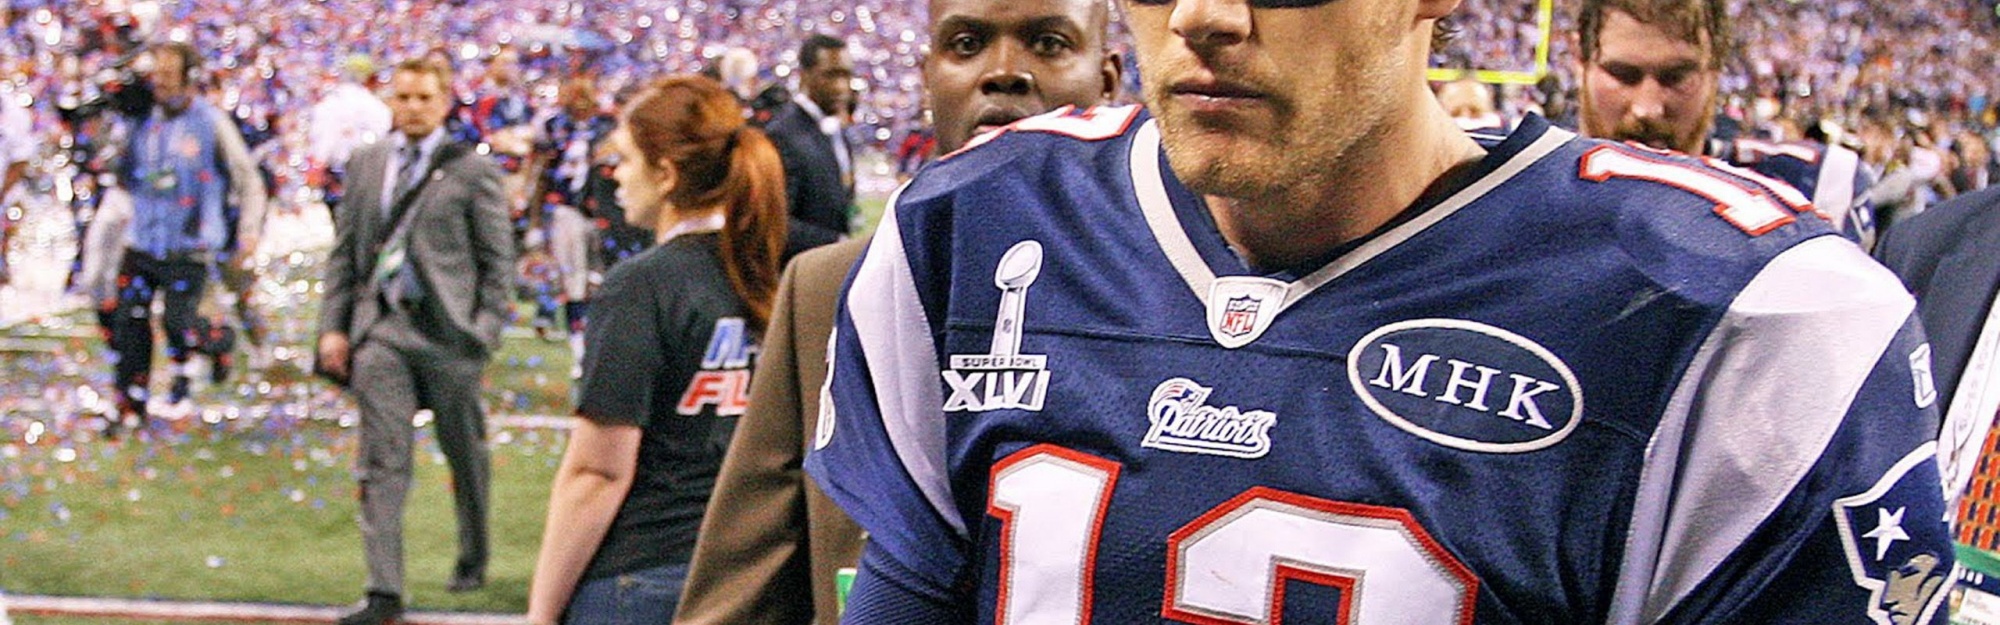 New England Patriots Super Bowl American Football Brady Tom